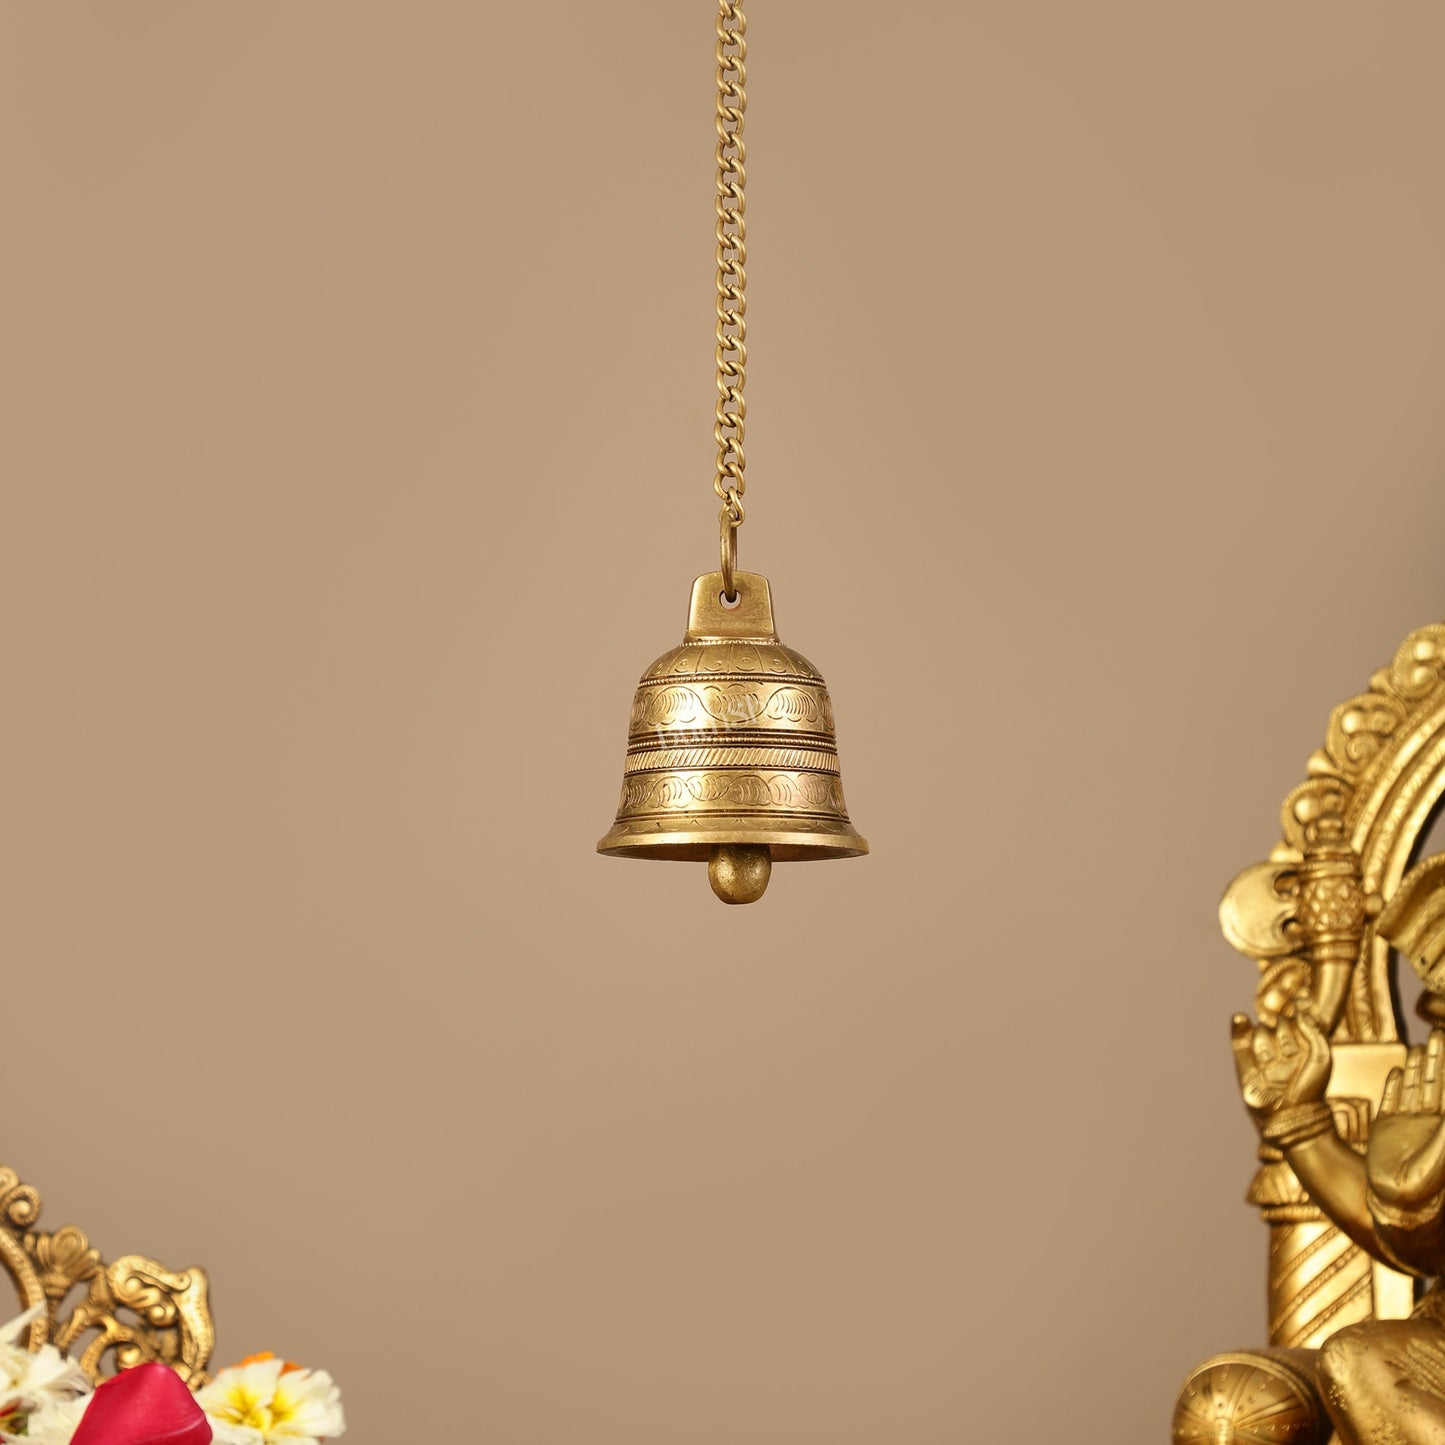 Brass Engraved hanging bell 3 inch diameter - Budhshiv.com